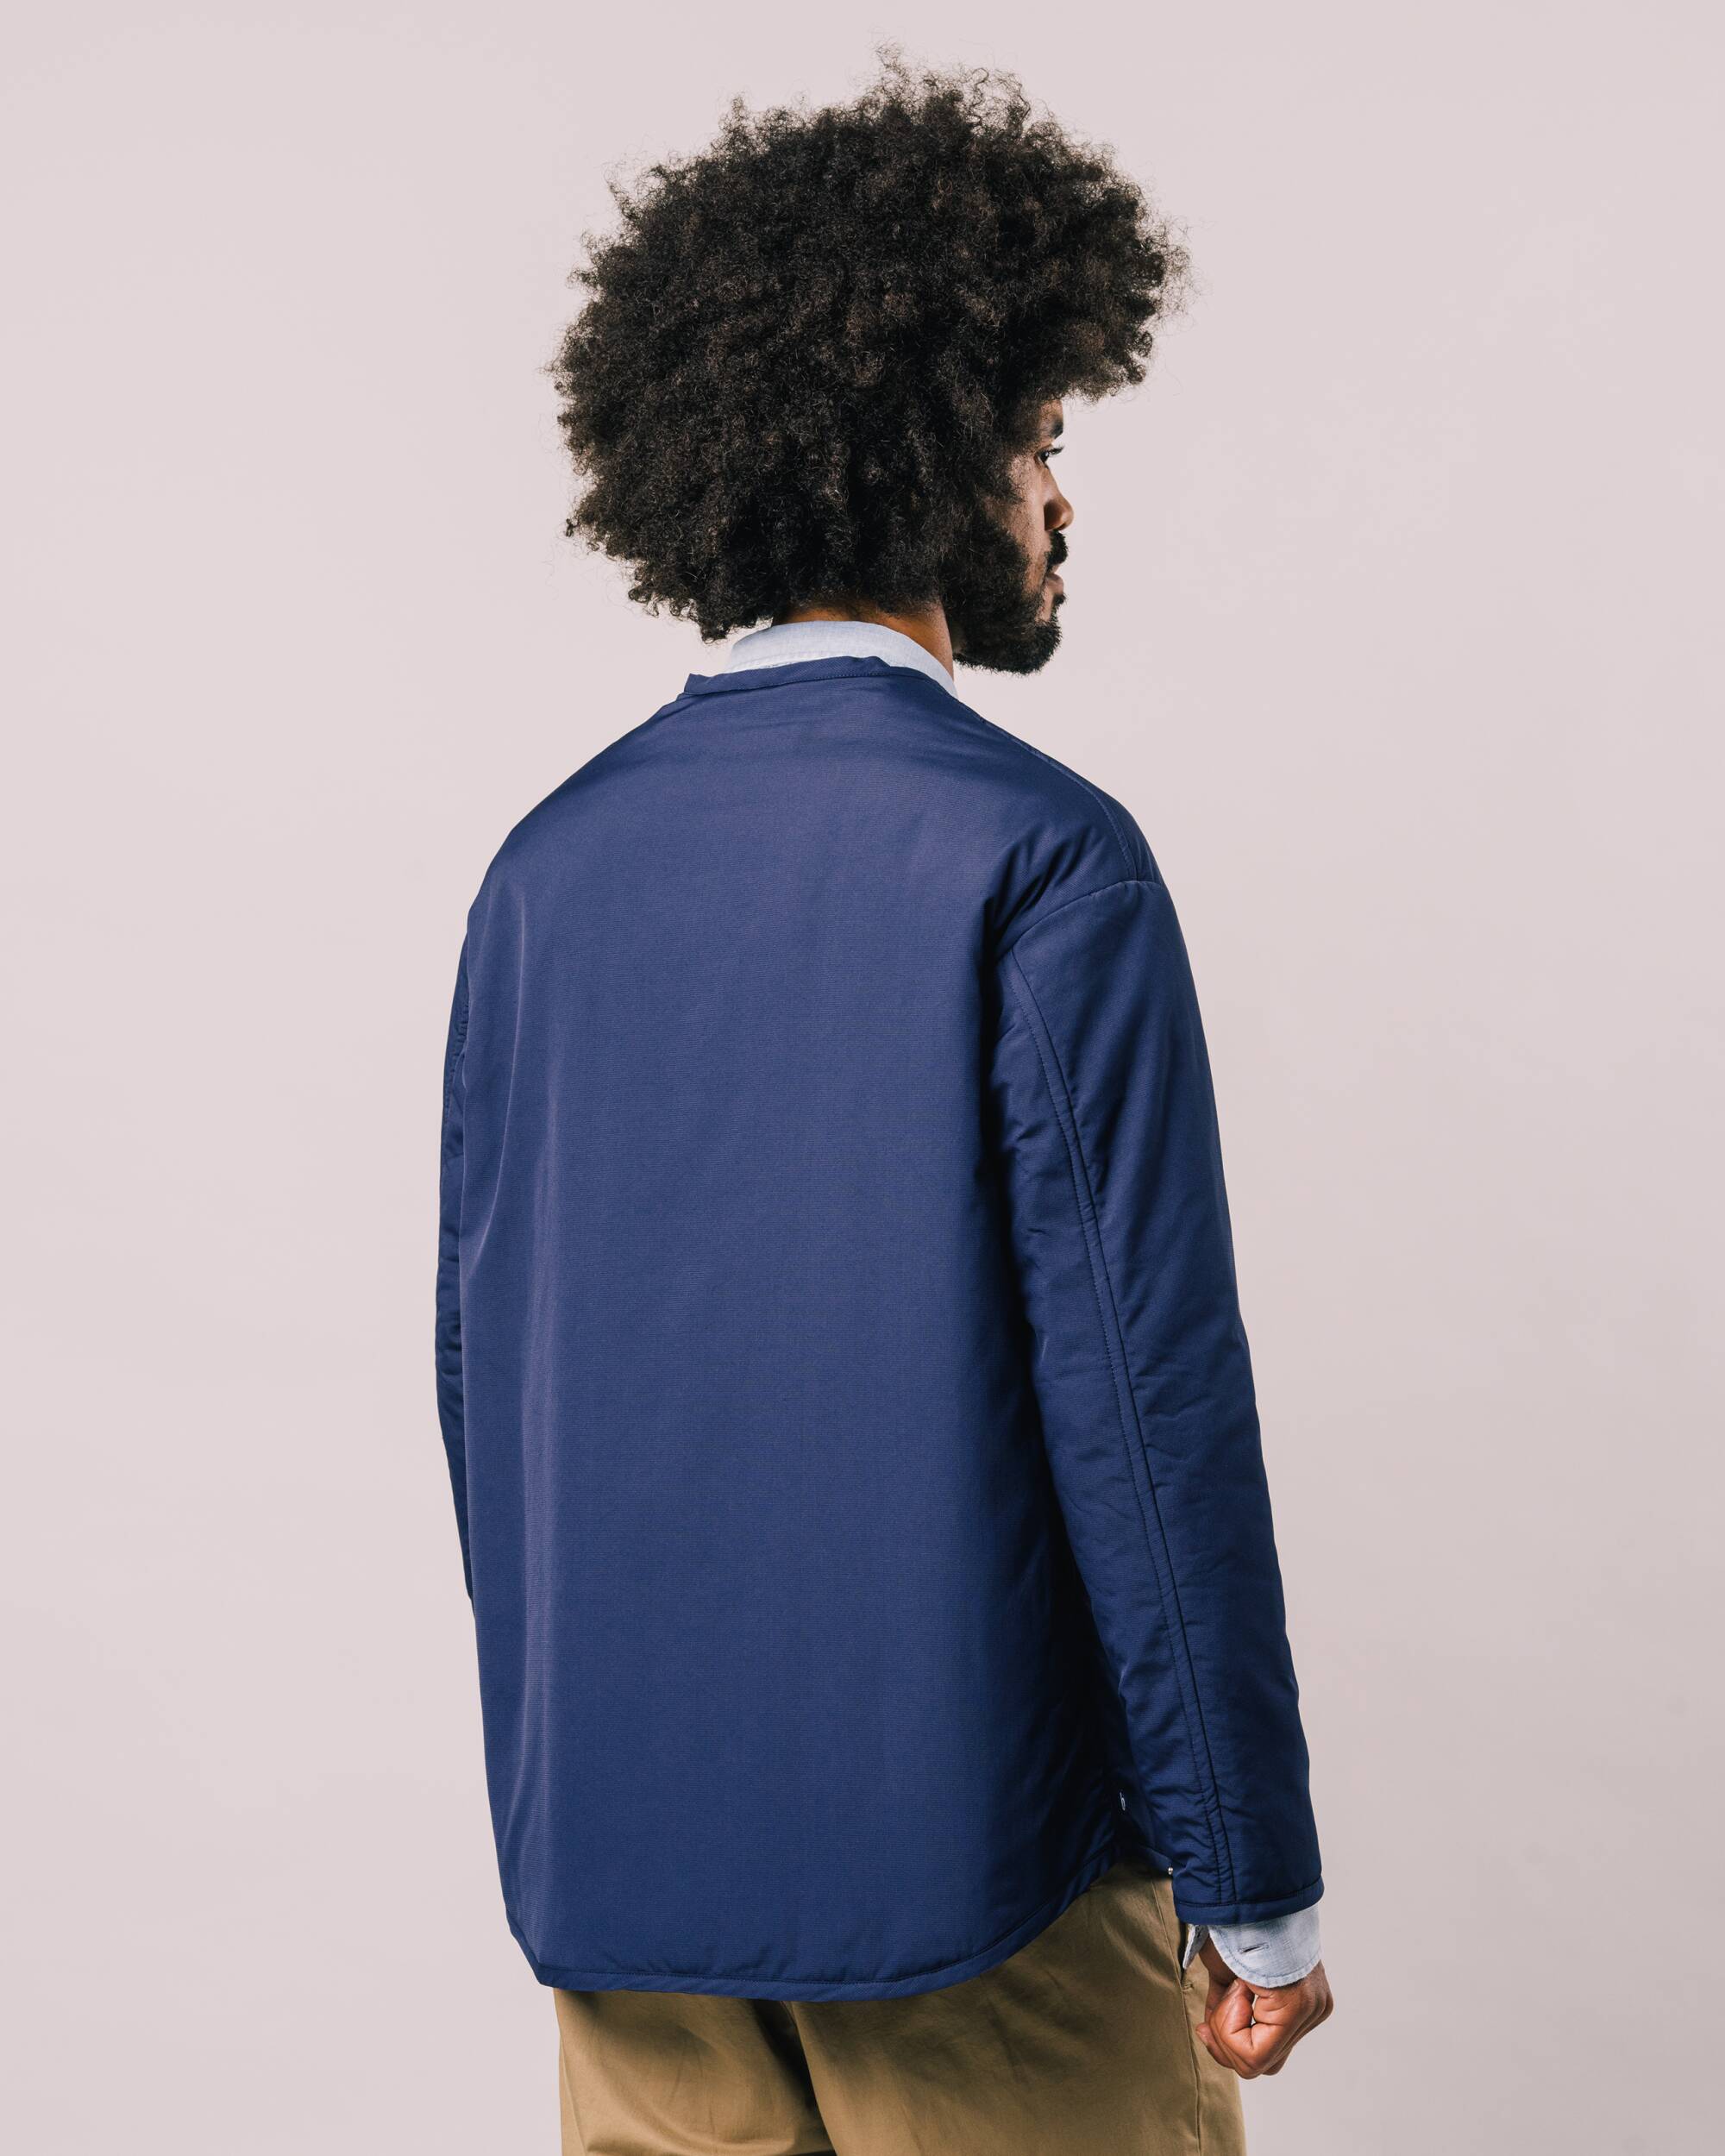 Dunkelblaue, gepolsterte Oversized Jacke aus recyceltem Polyester von Brava Fabrics